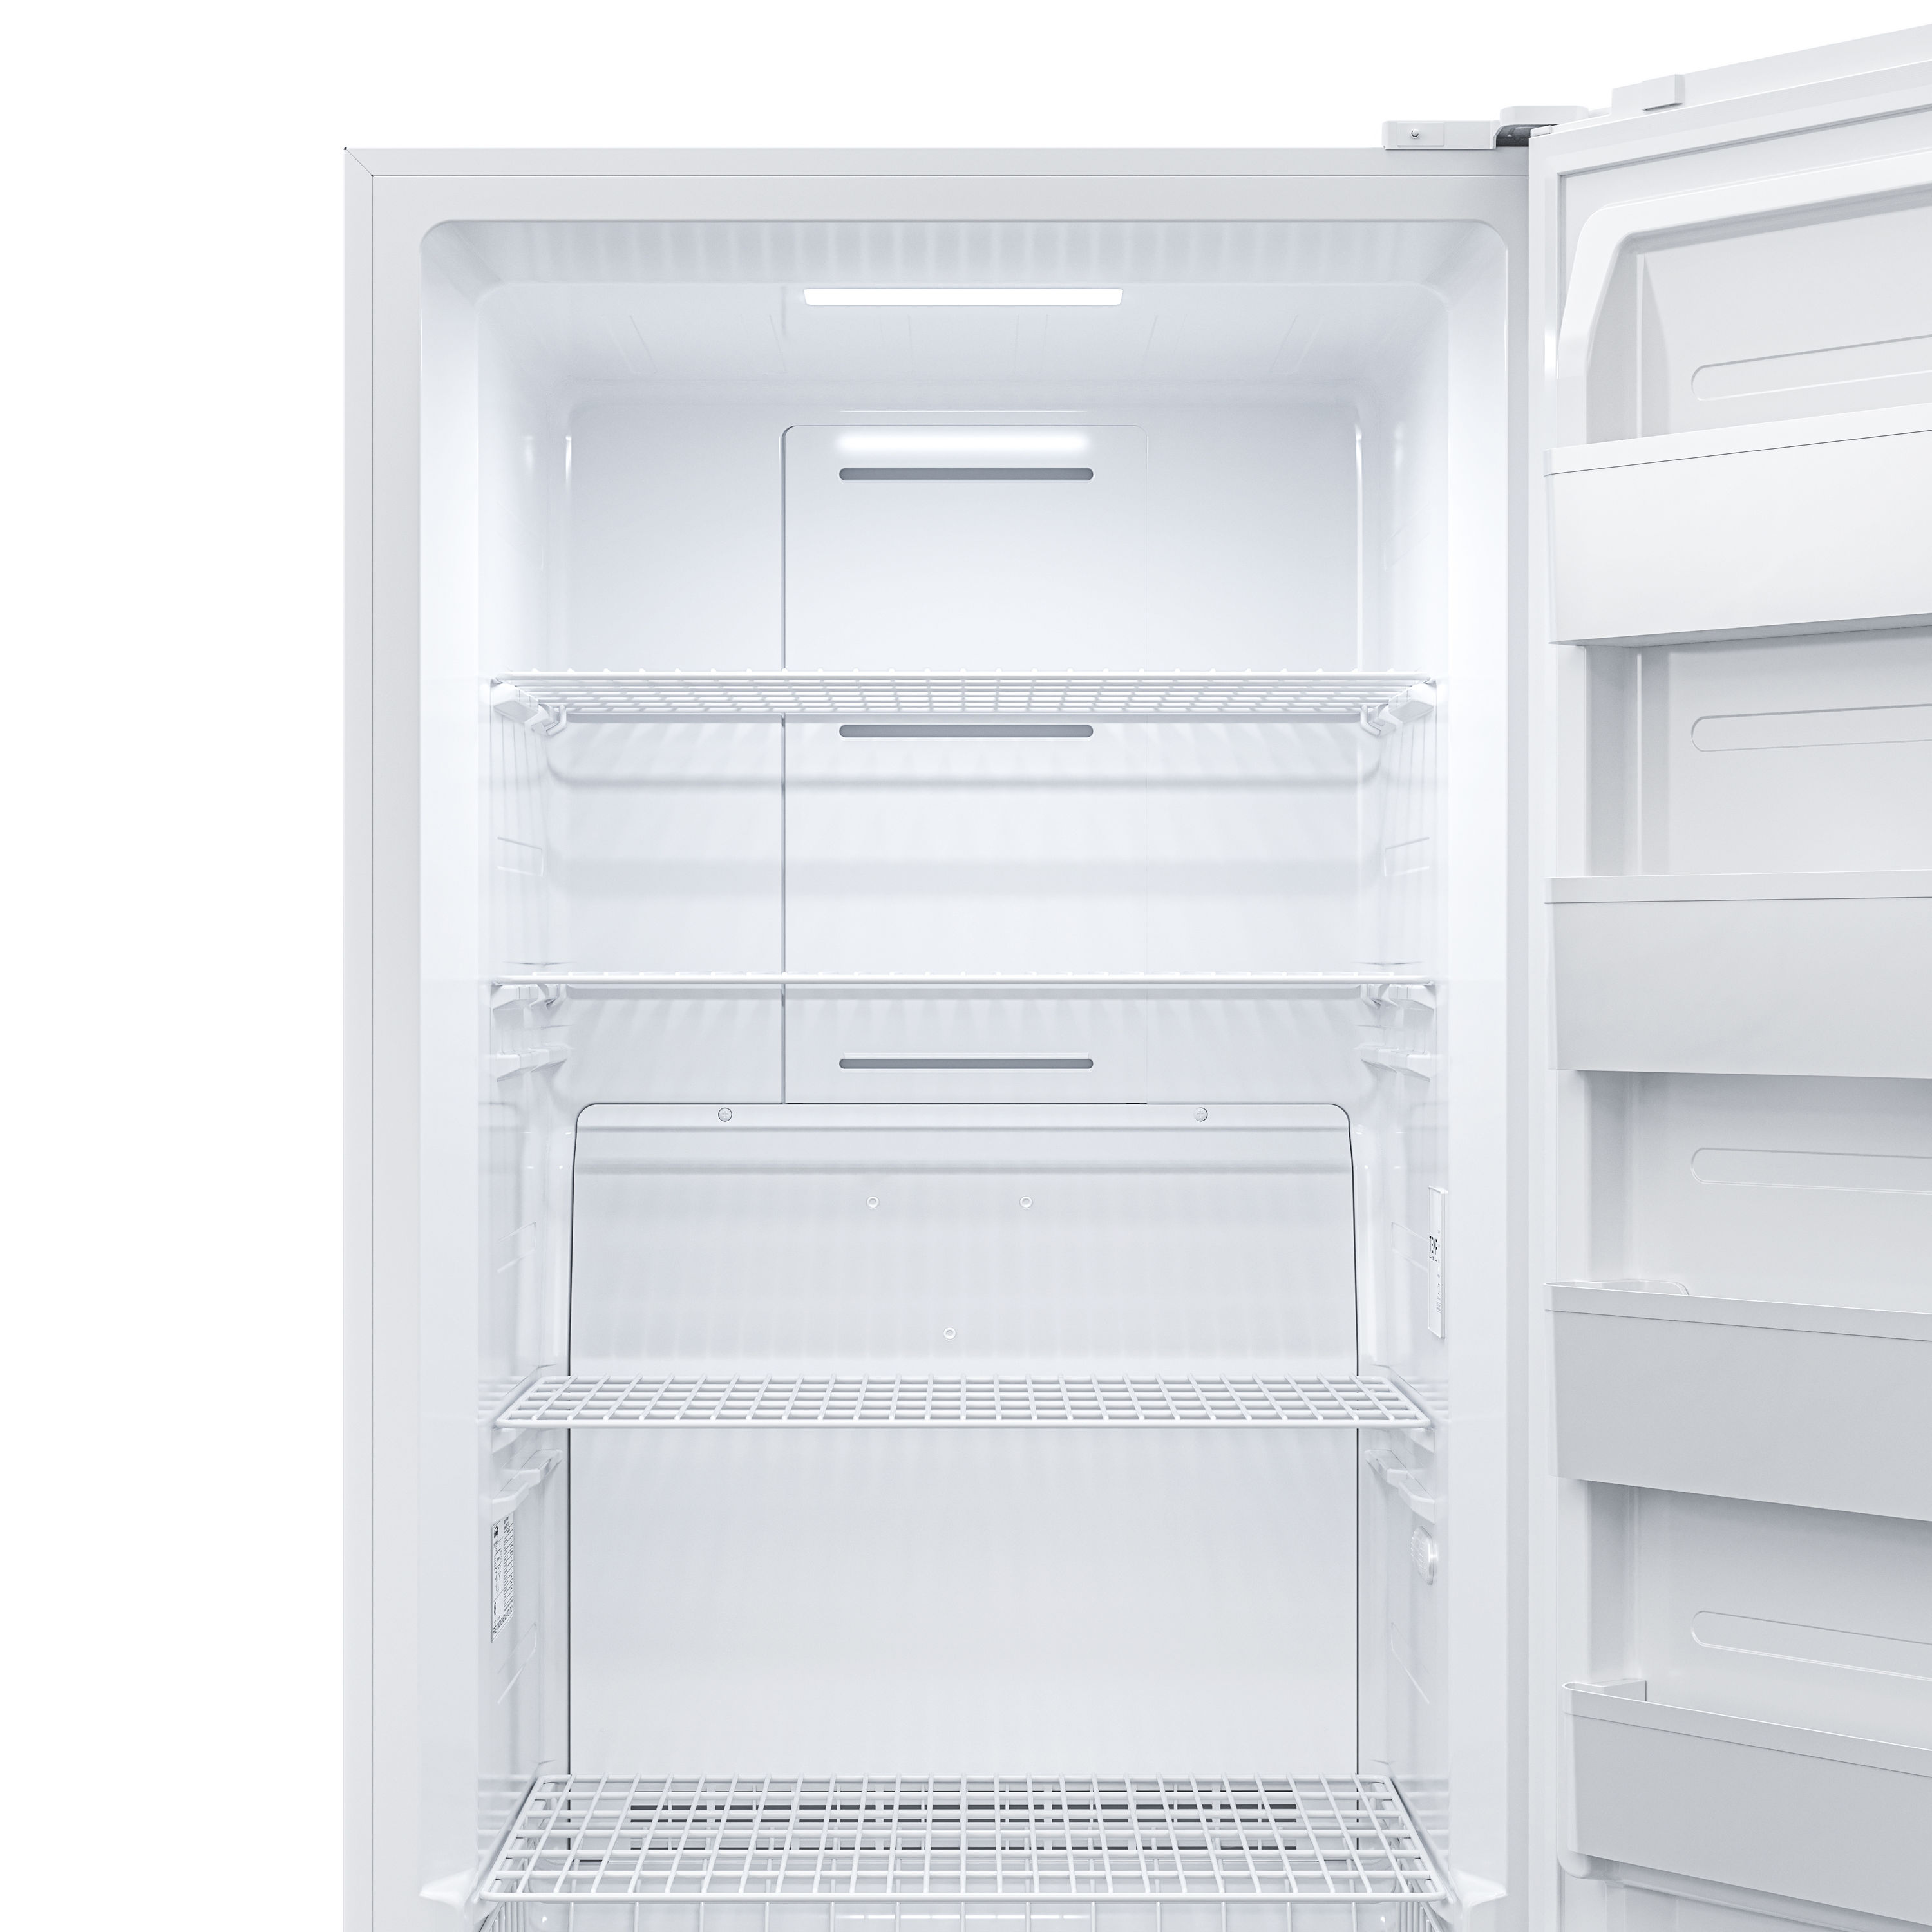 KoolMore 7 Cu. Ft Upright Freezer in White.